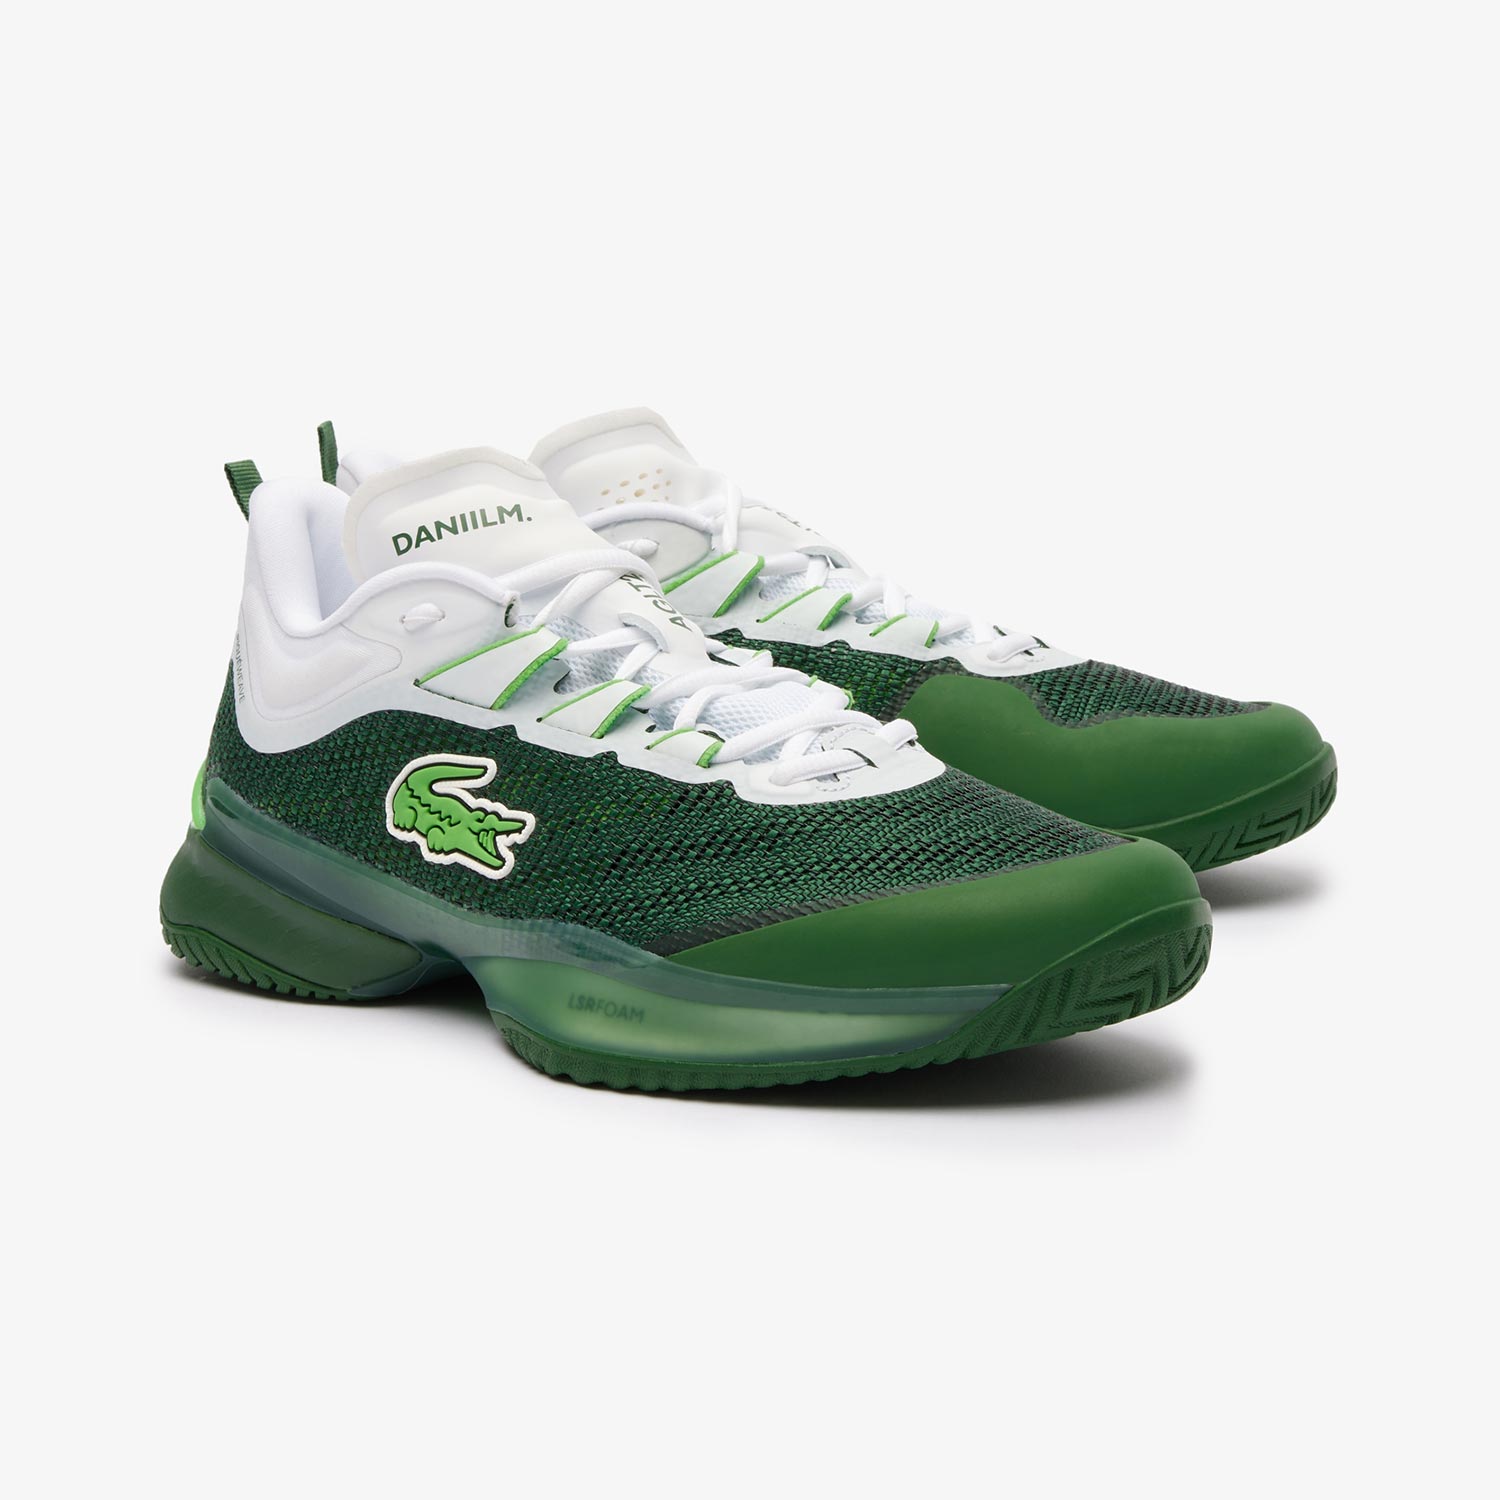 Lacoste AG-LT23 Ultra Men's Tennis Shoes - Green (3)